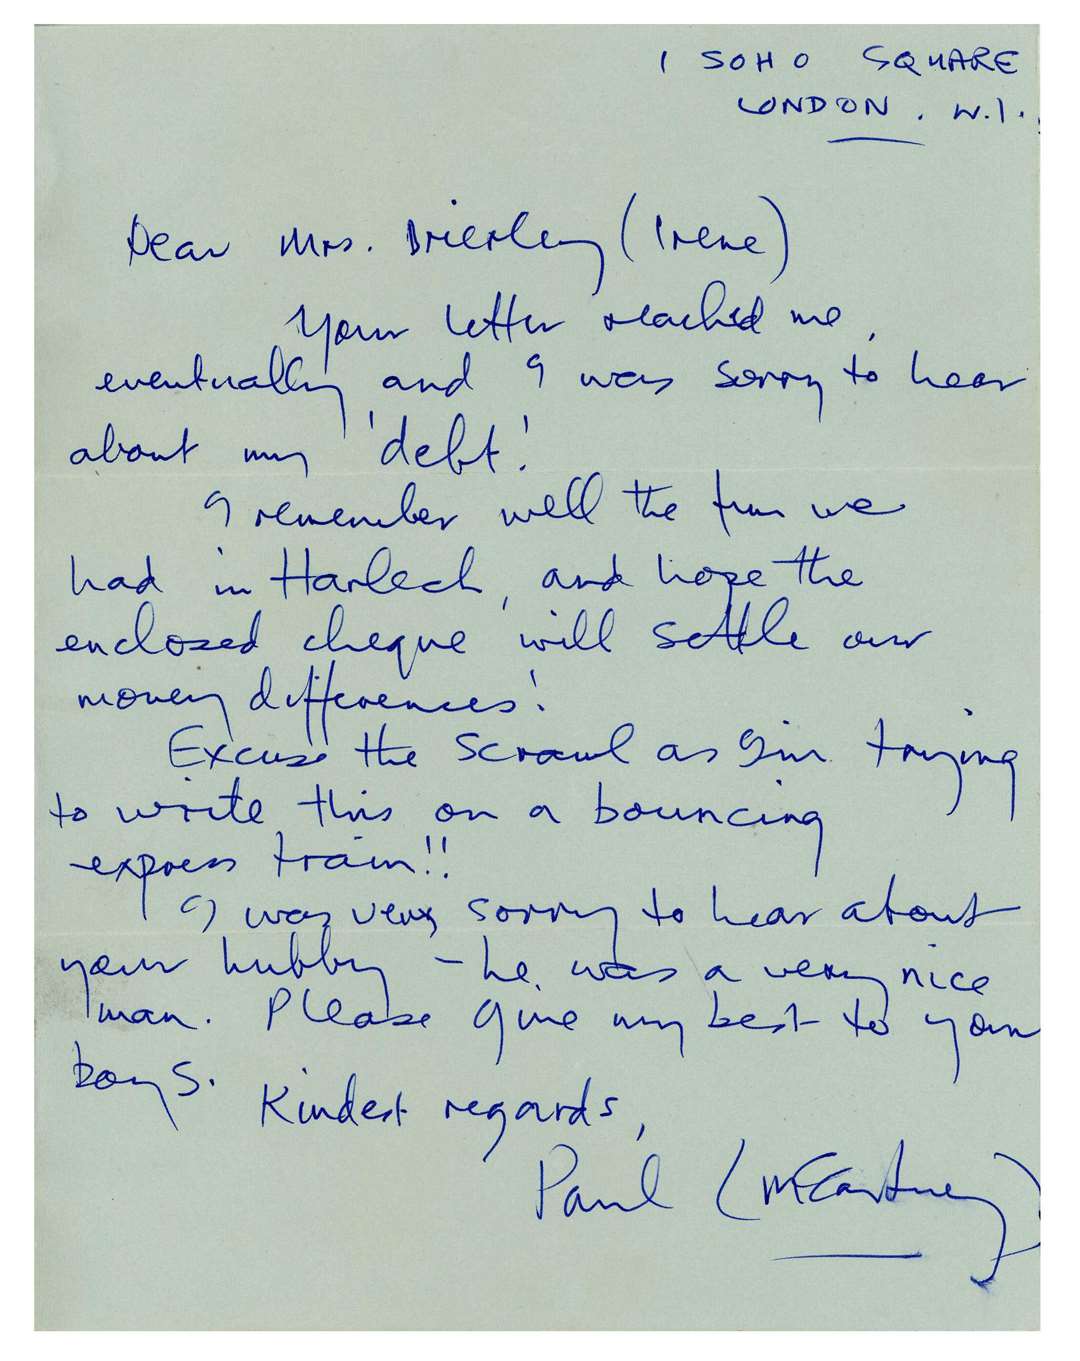 Letter from Paul McCartney to Irene Brierley to repay blanket ‘debt’ (Tracks Ltd/PA)